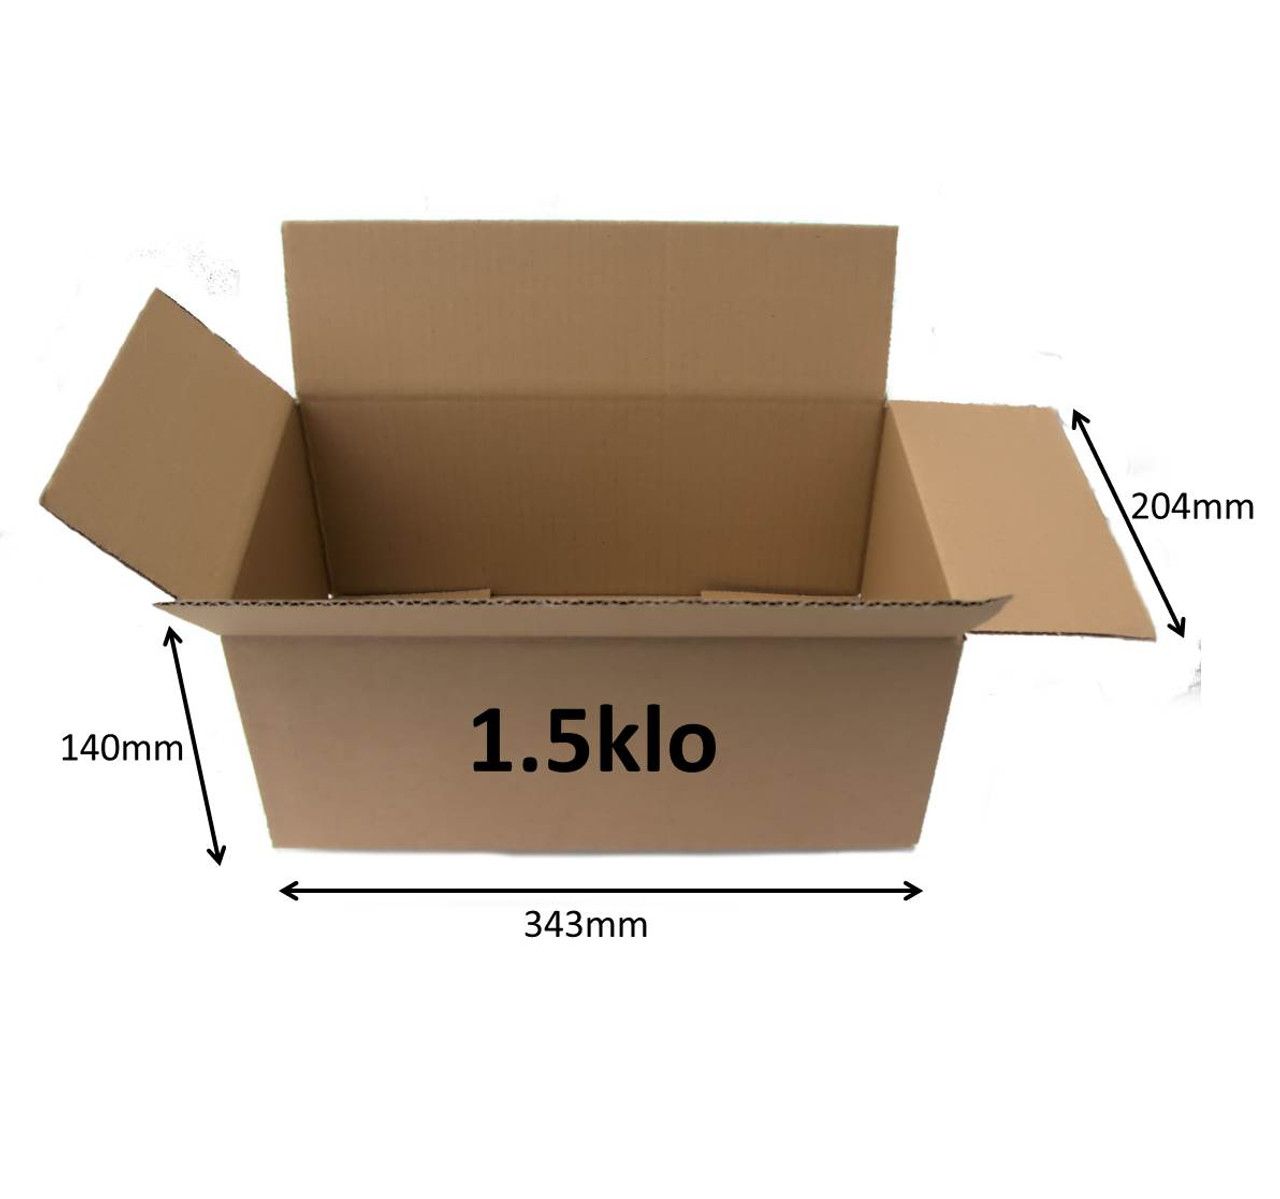 Pack of 25 1.5klo Cardboard box  343 x 204 x 140mm 